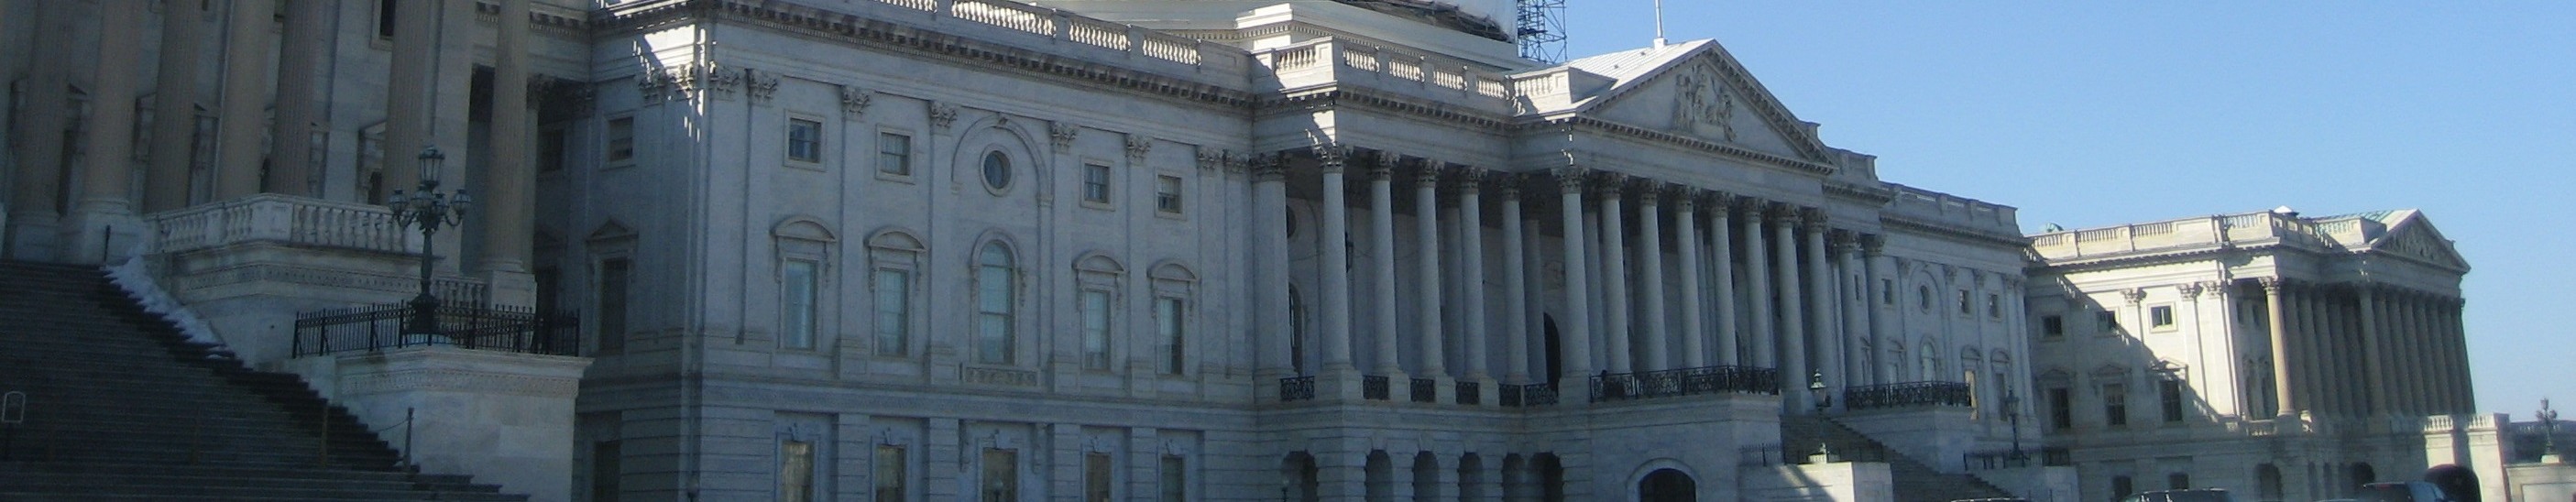 Capitol Dome 2015